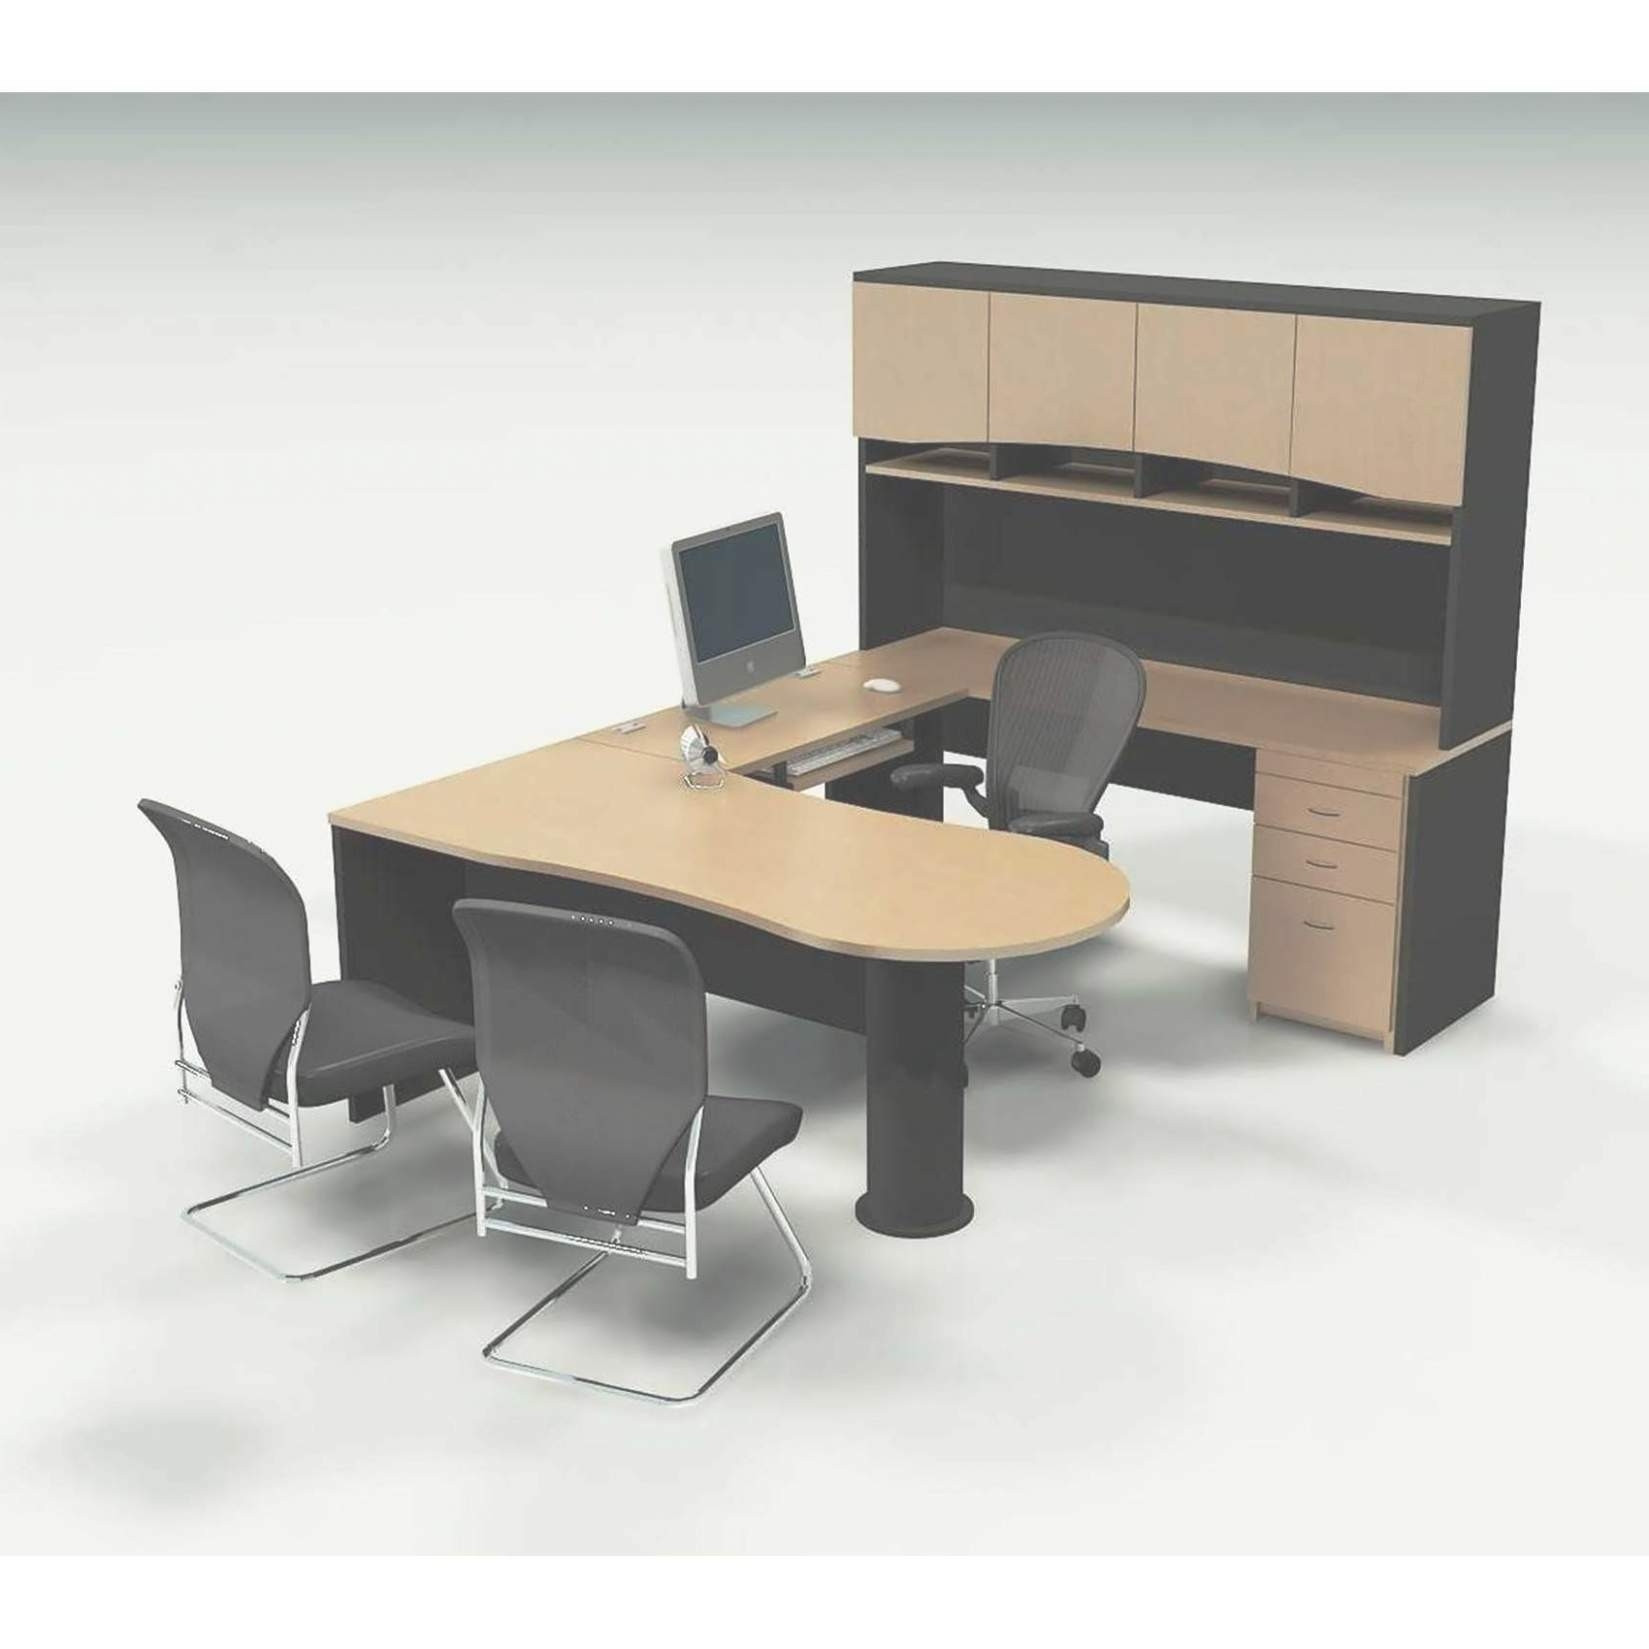 Best ideas about Modern Home Office Desk
. Save or Pin 35 Best Collection of Modern Home fice Desk Now.